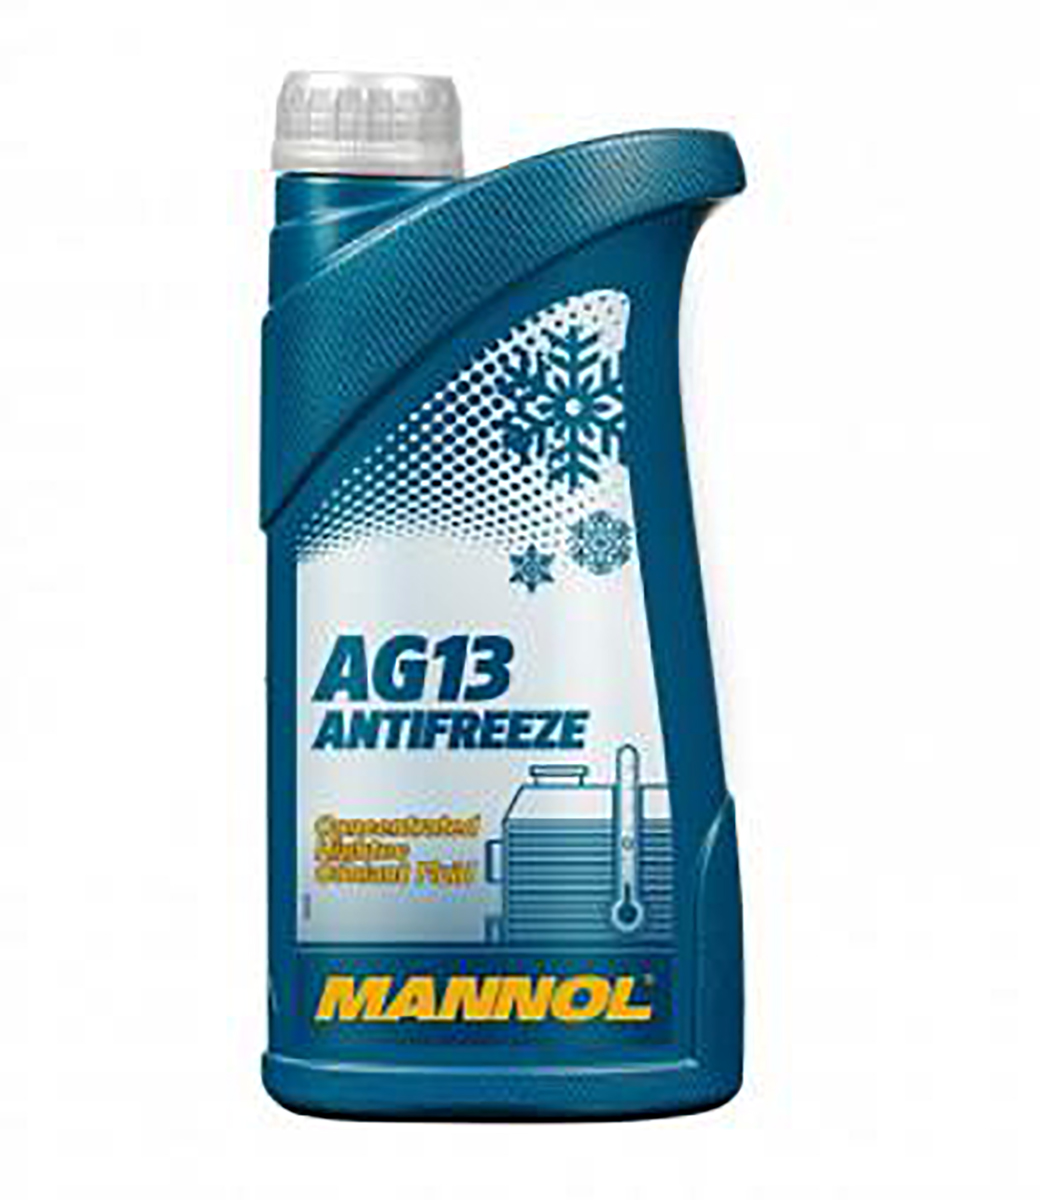 Antifreeze AG13 Hightec